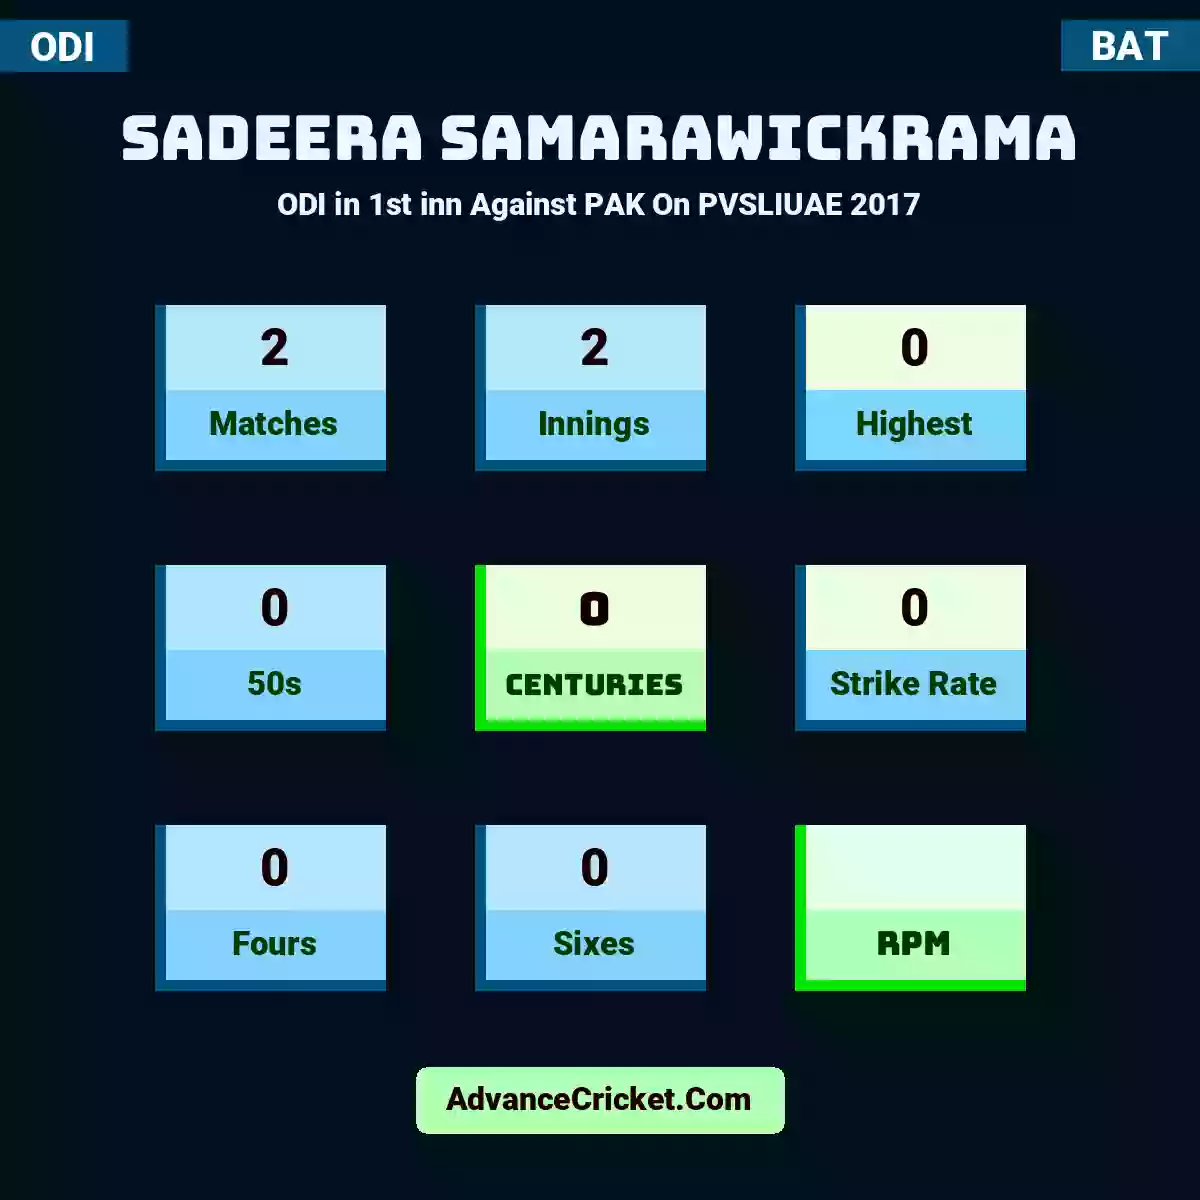 Sadeera Samarawickrama ODI  in 1st inn Against PAK On PVSLIUAE 2017, Sadeera Samarawickrama played 2 matches, scored 0 runs as highest, 0 half-centuries, and 0 centuries, with a strike rate of 0. S.Samarawickrama hit 0 fours and 0 sixes.